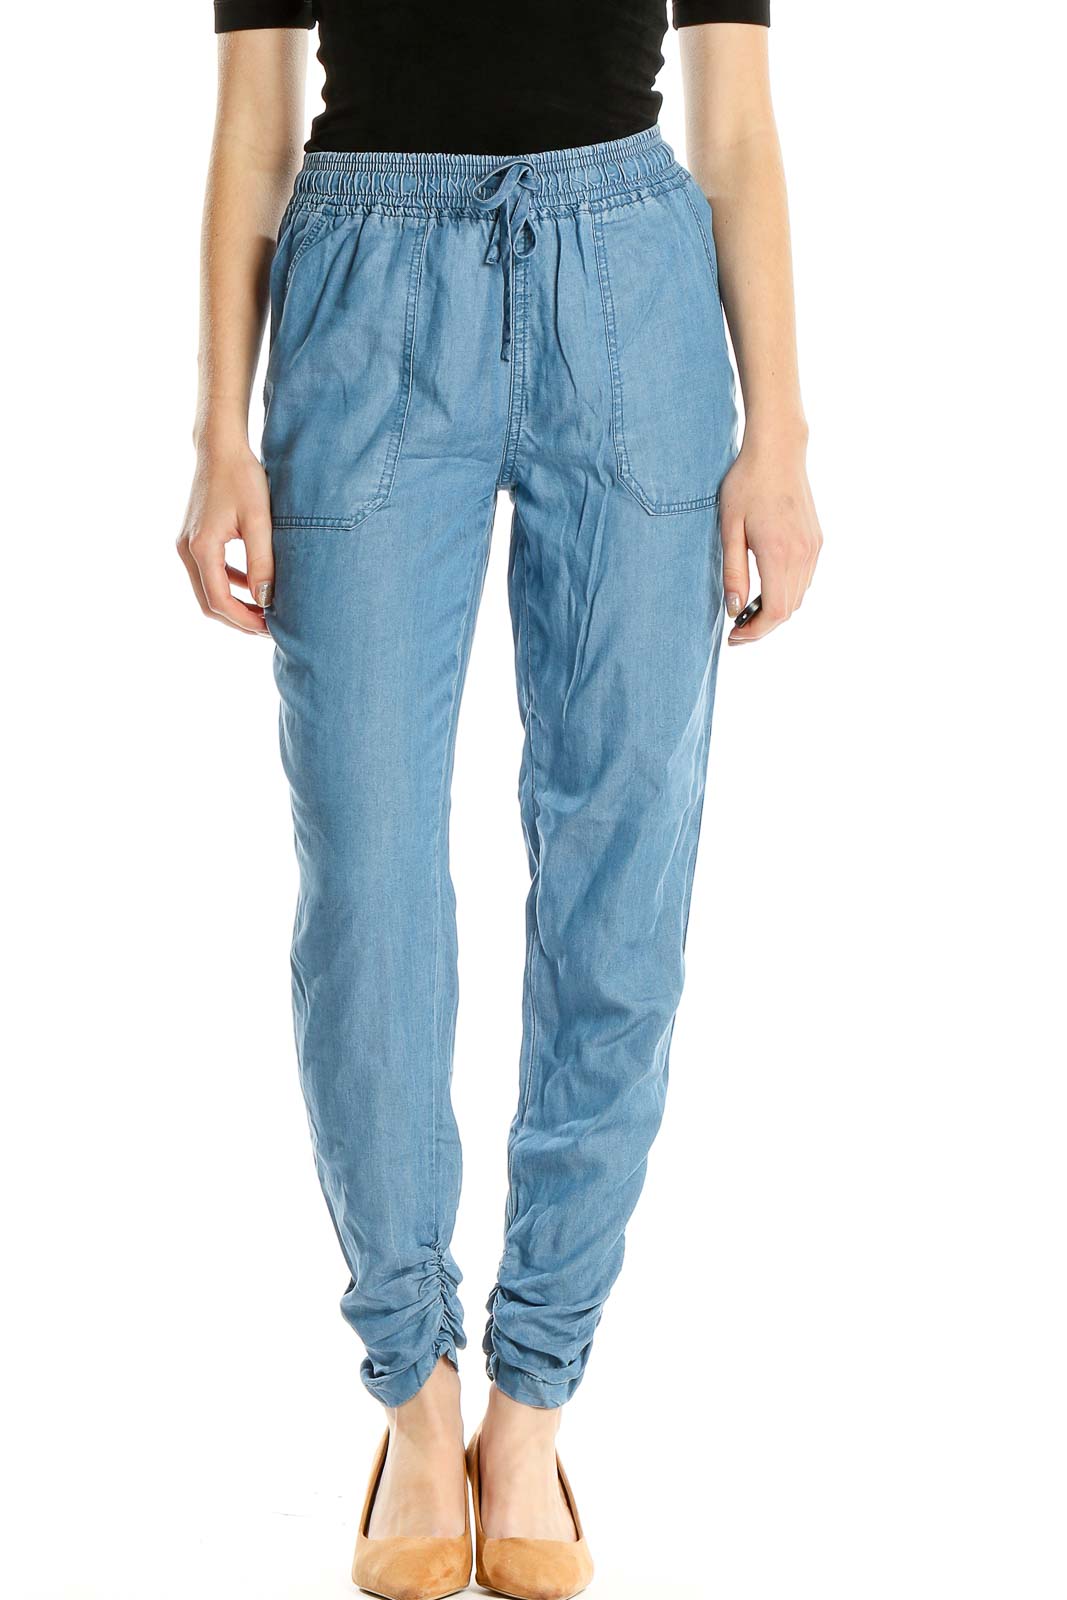 Blue Casual Drawstring Pants Front